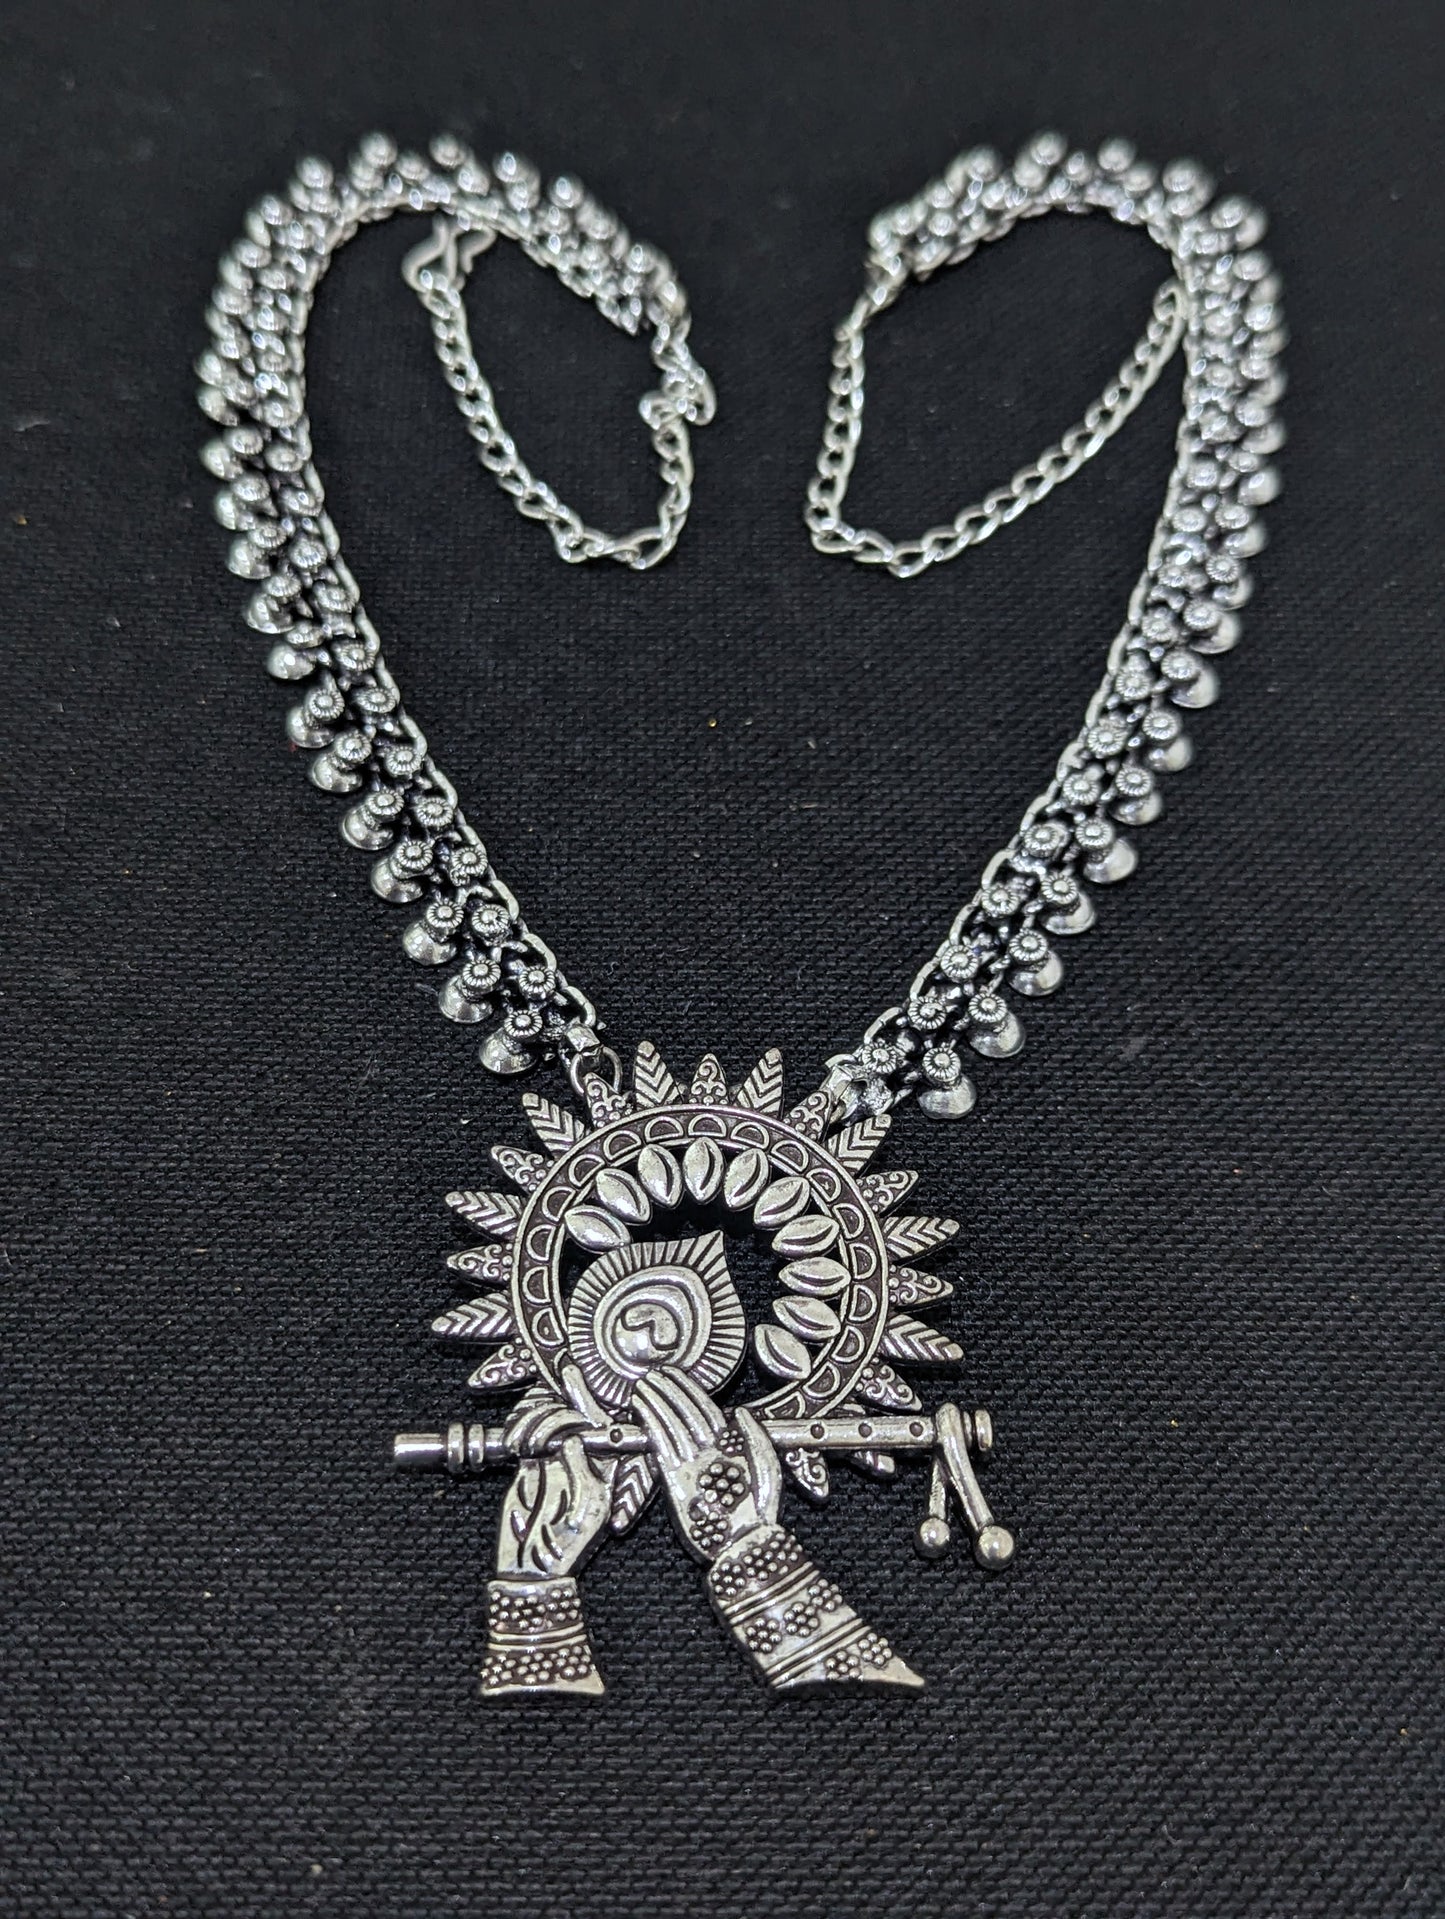 Oxidized Silver Long Chain Necklace - D4